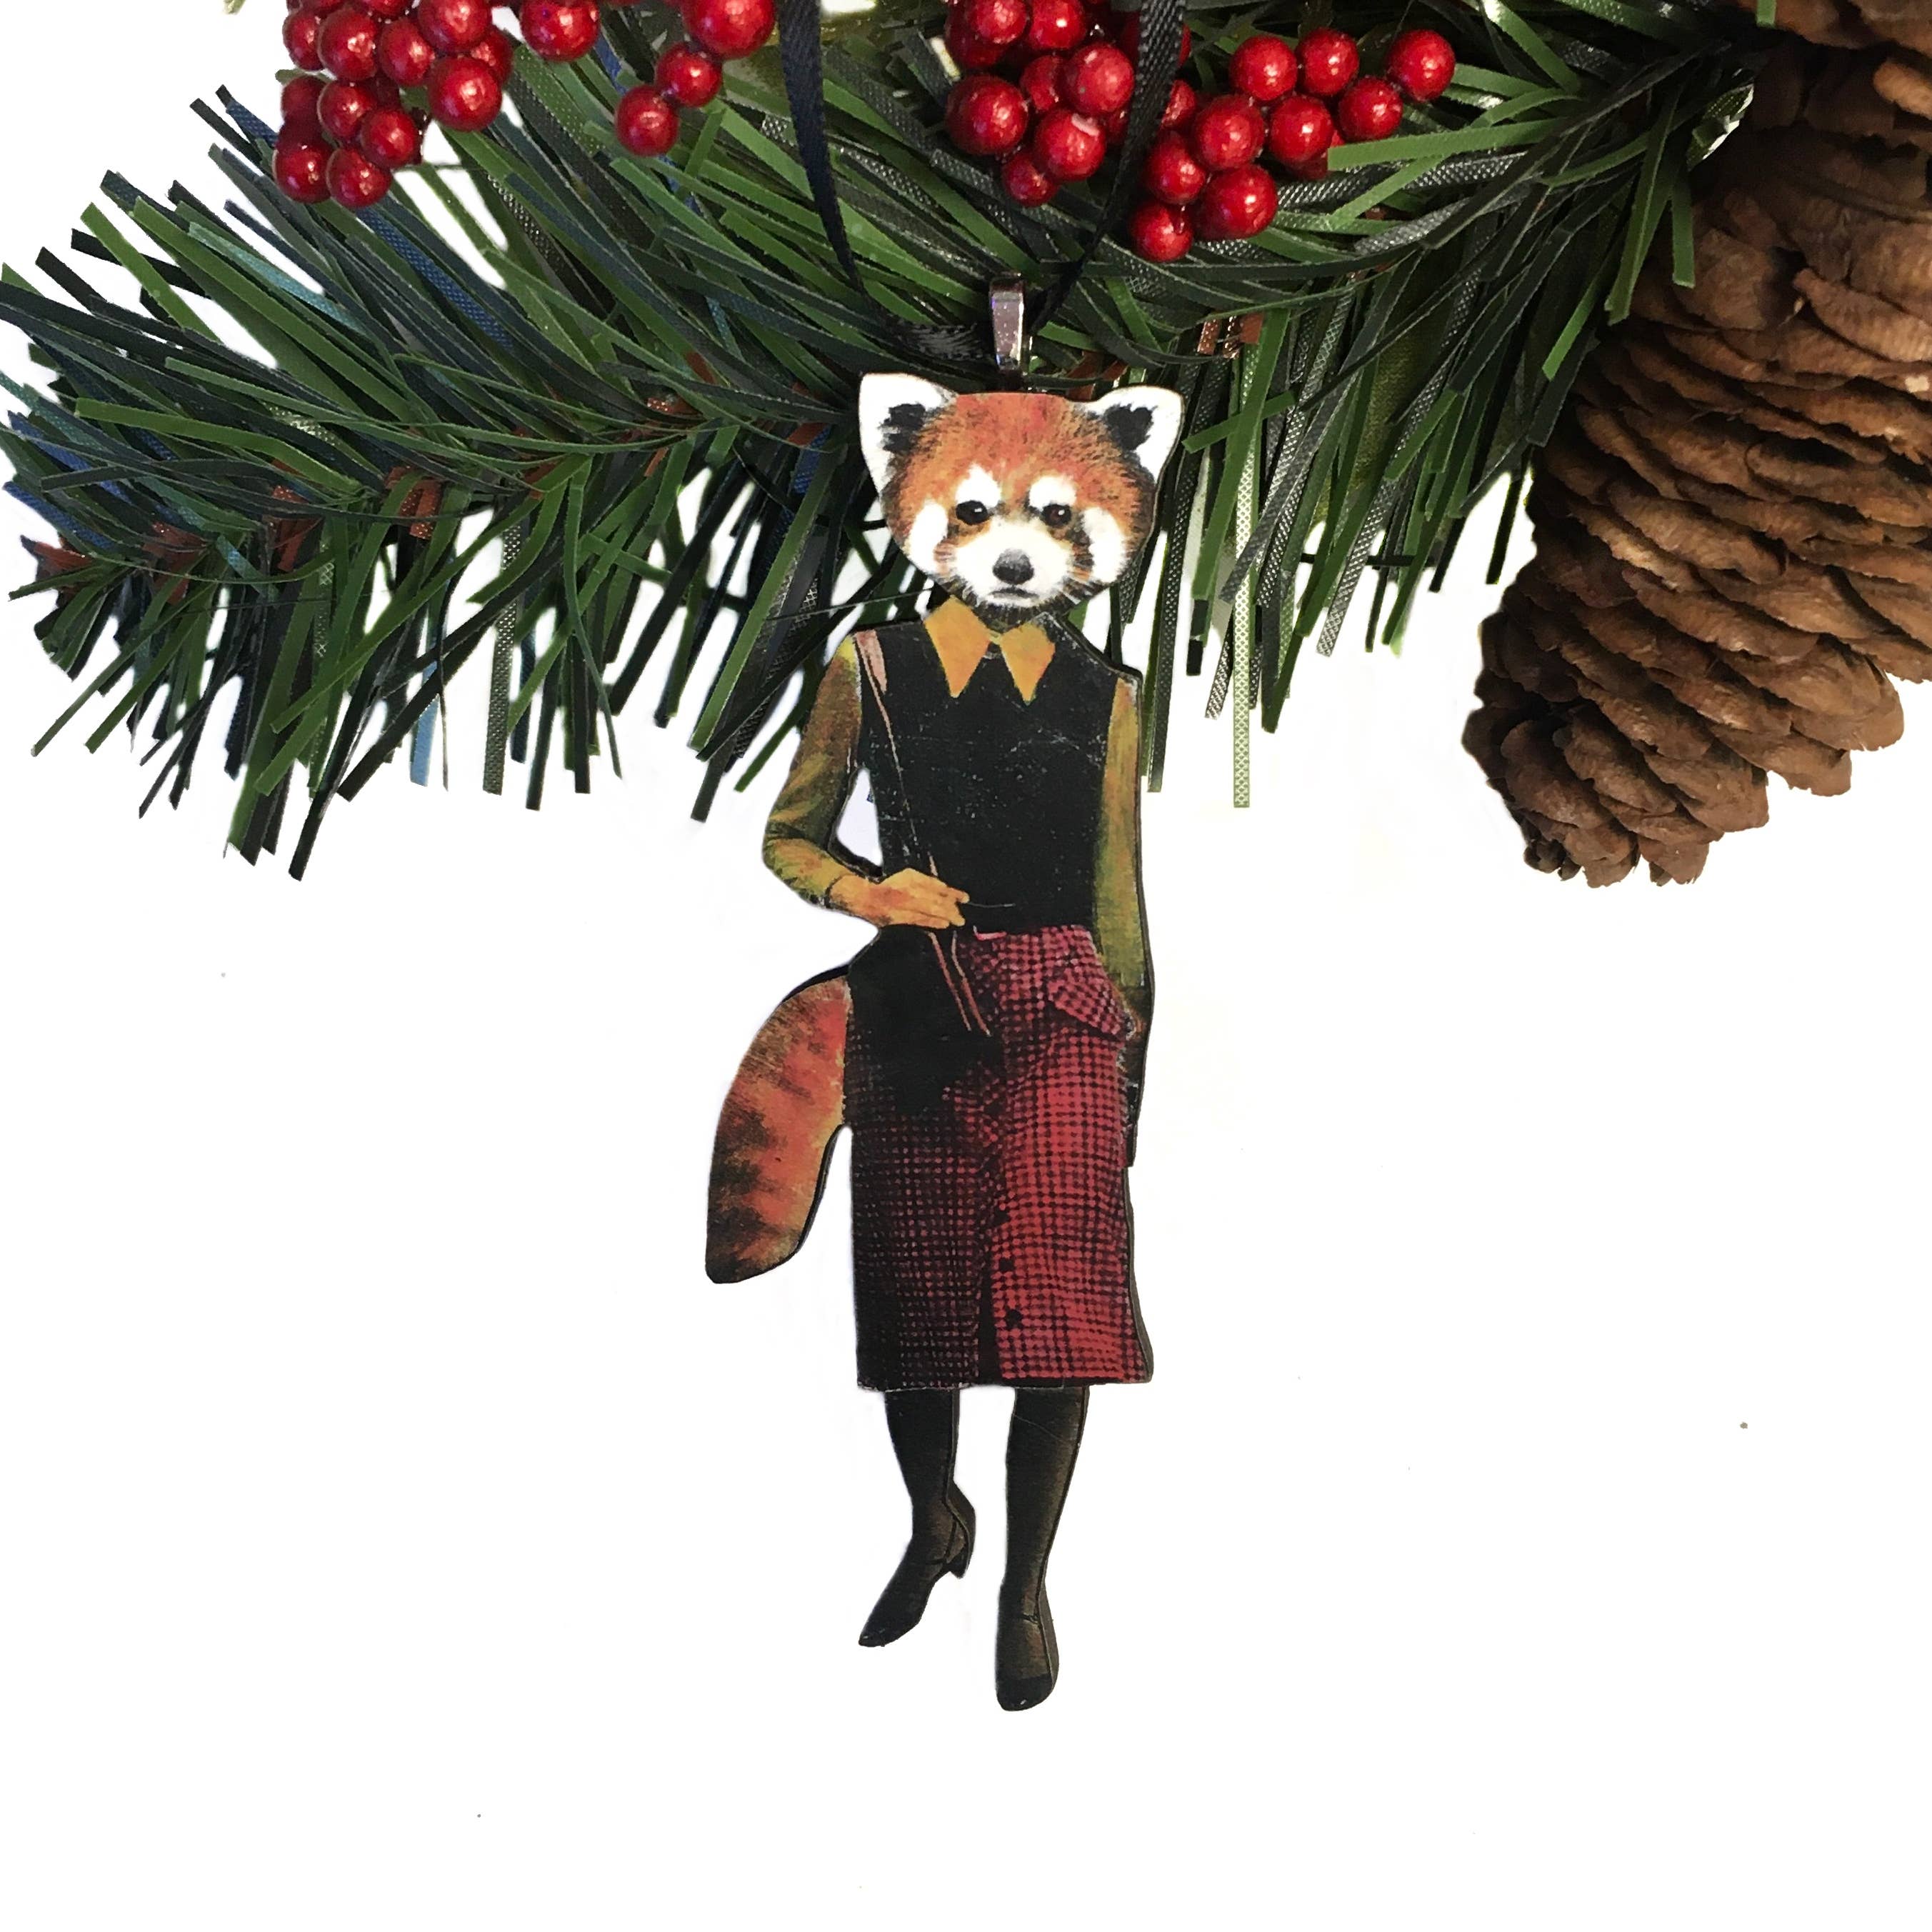 Red Panda Christmas Ornament - Eco-friendly, Zero Waste, plastic free, handmade